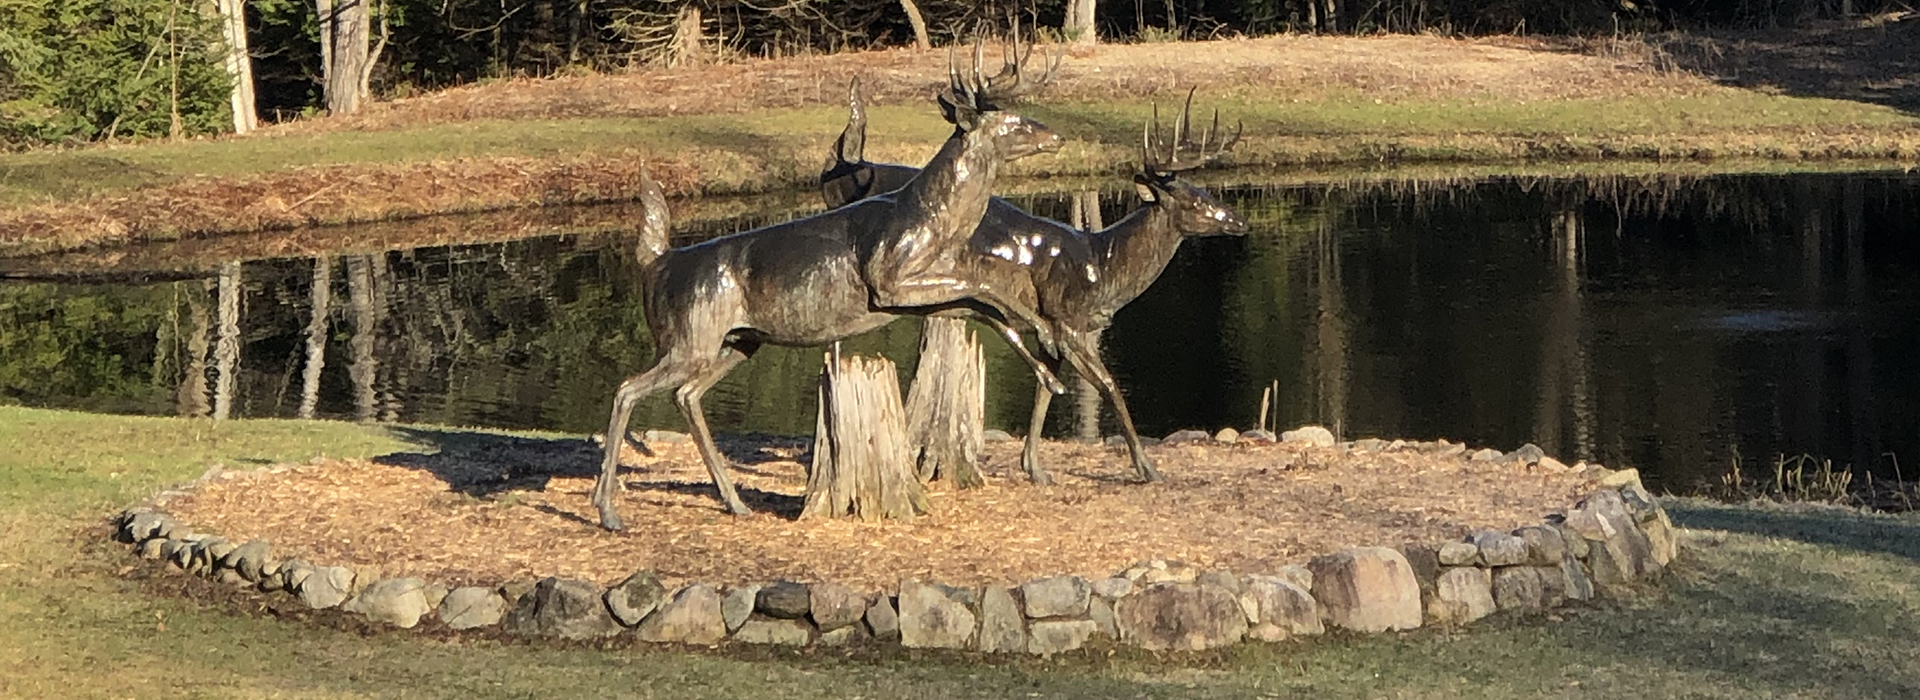 Bronze Deer Statue by The Lodge Pond - Drettmann Ranch